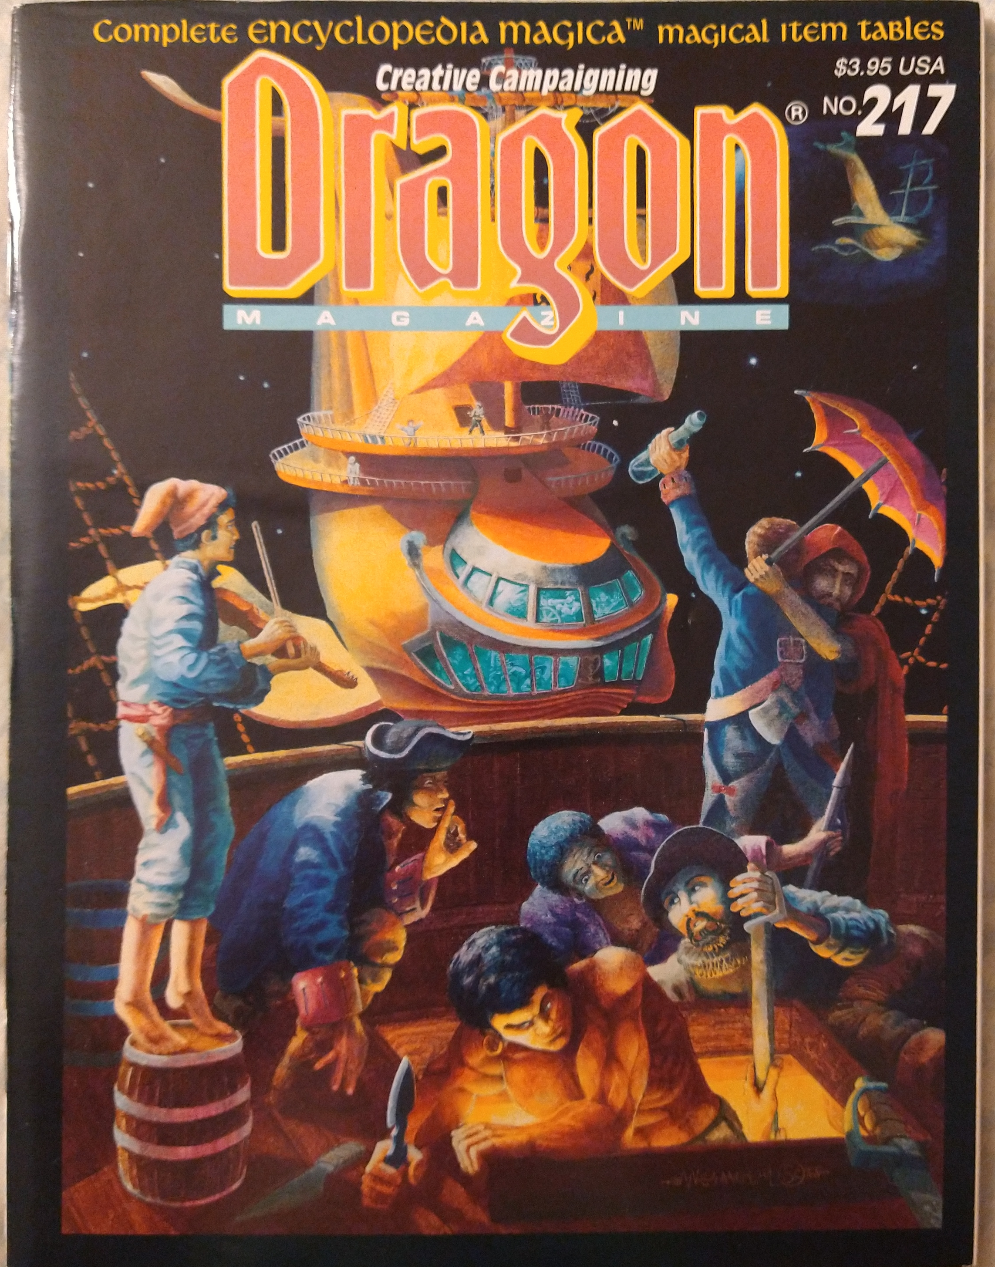 Dragon Magazine #217